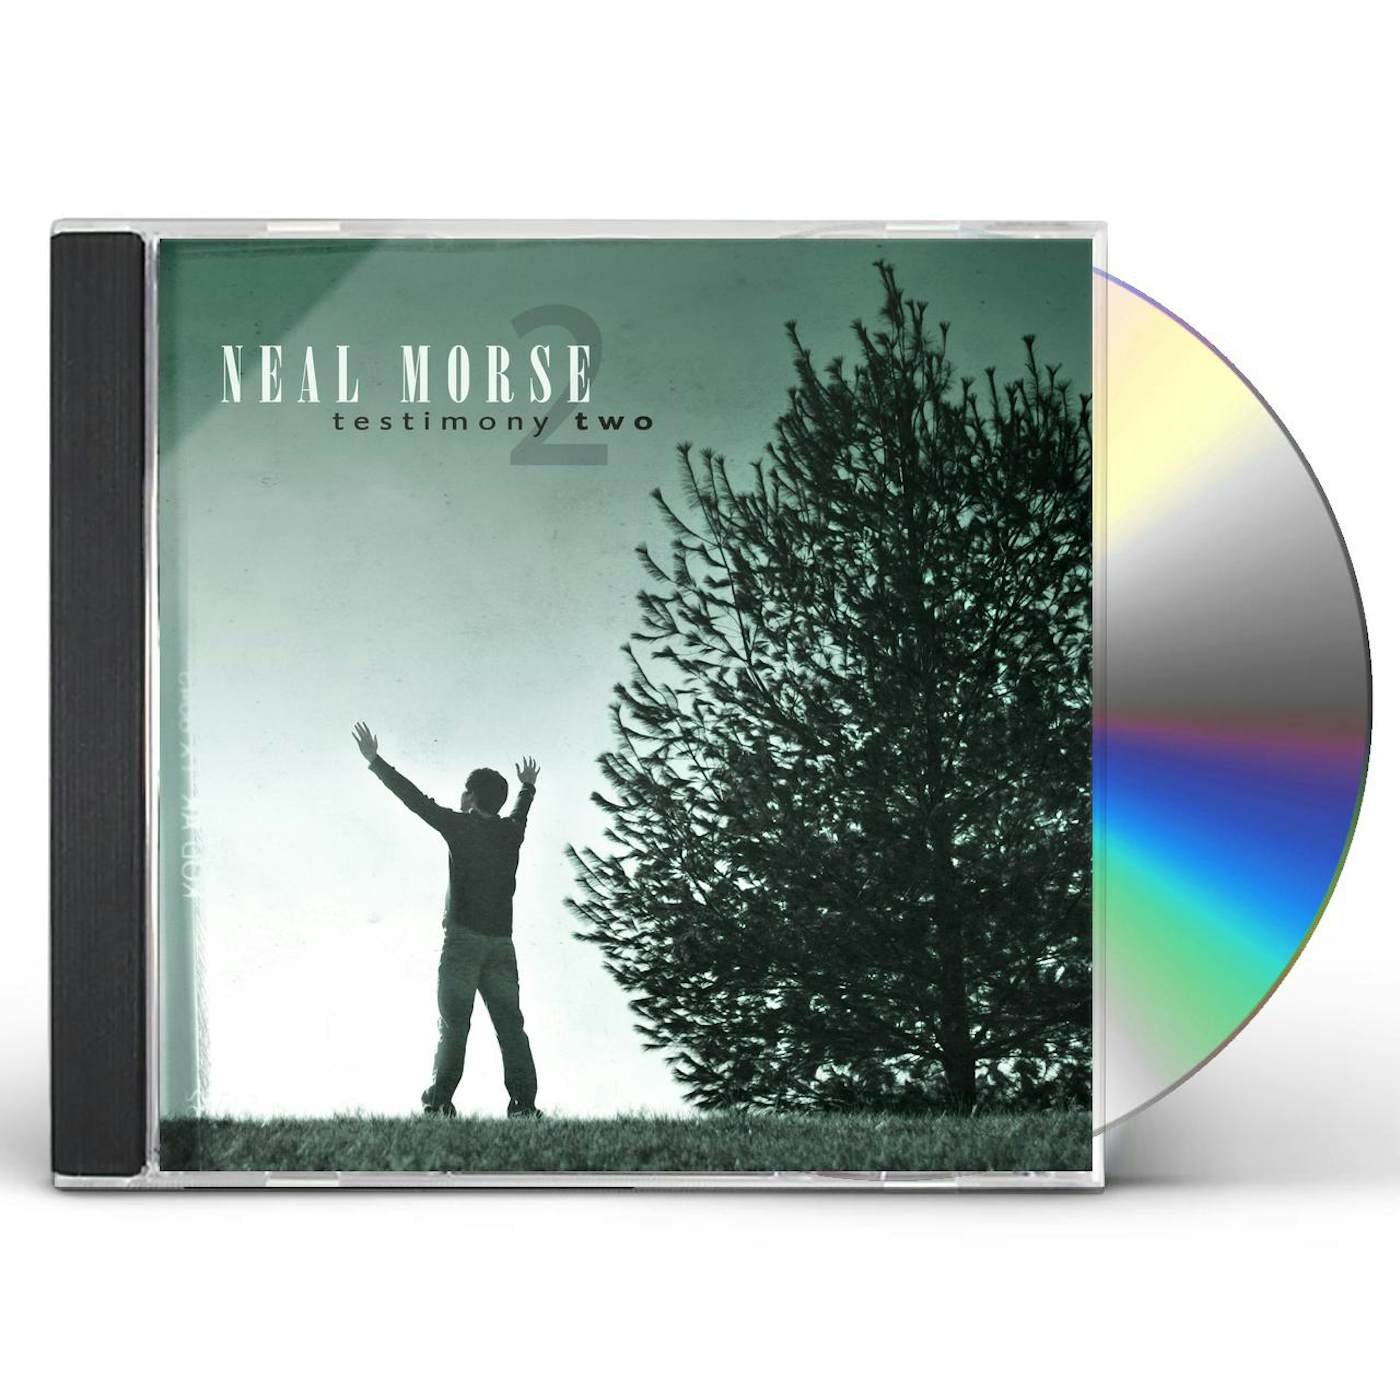 Neal Morse TESTIMONY 2 CD